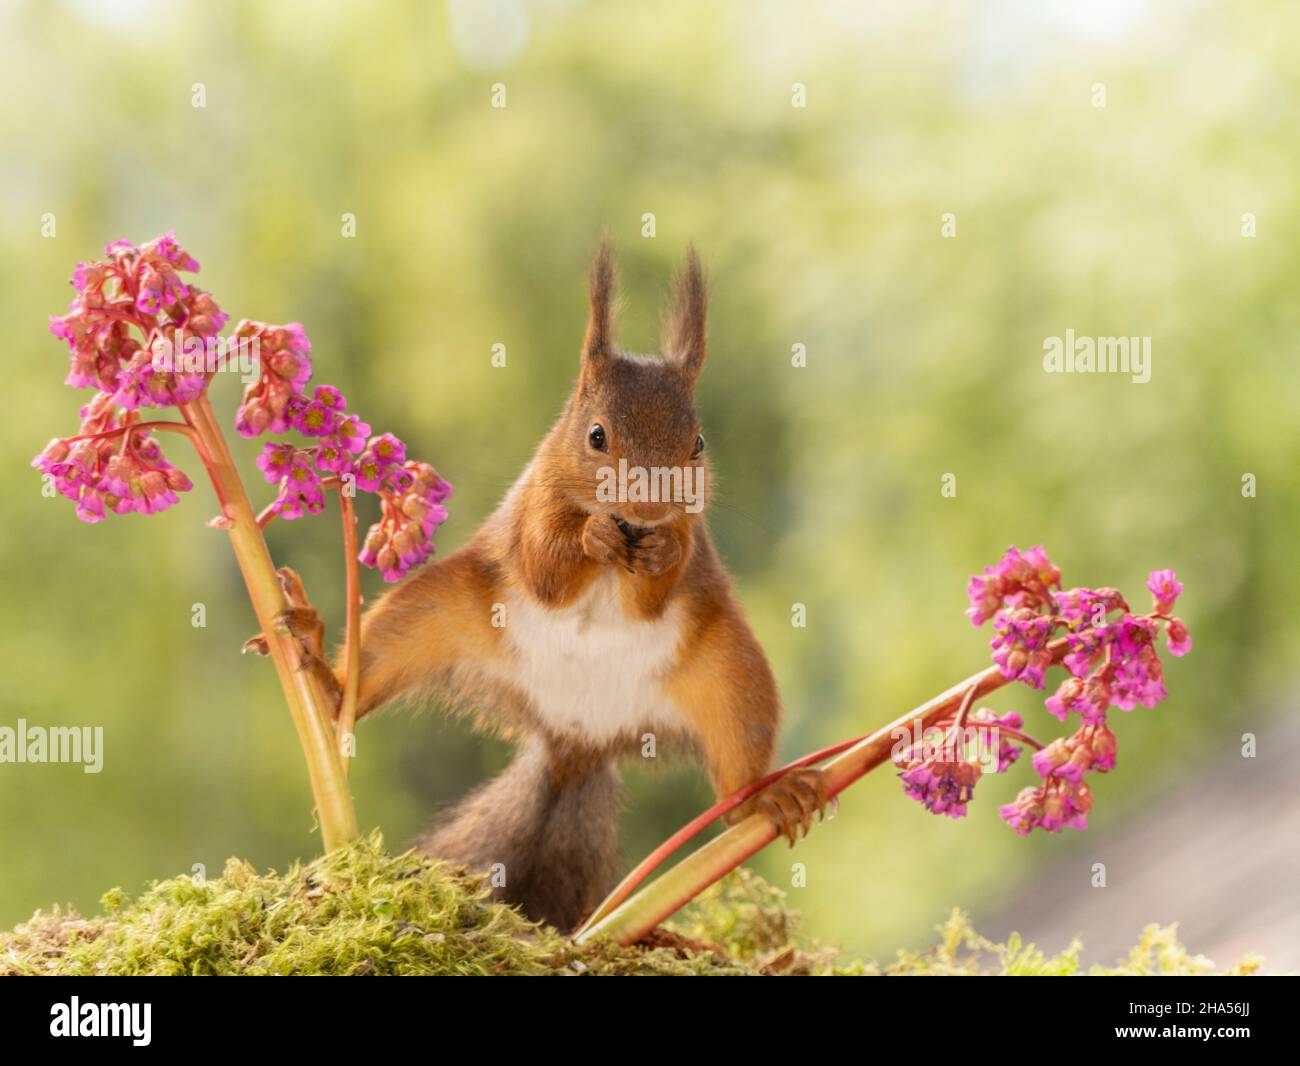 red squirrel is standing in an split between bergenia flowers Stock Photo